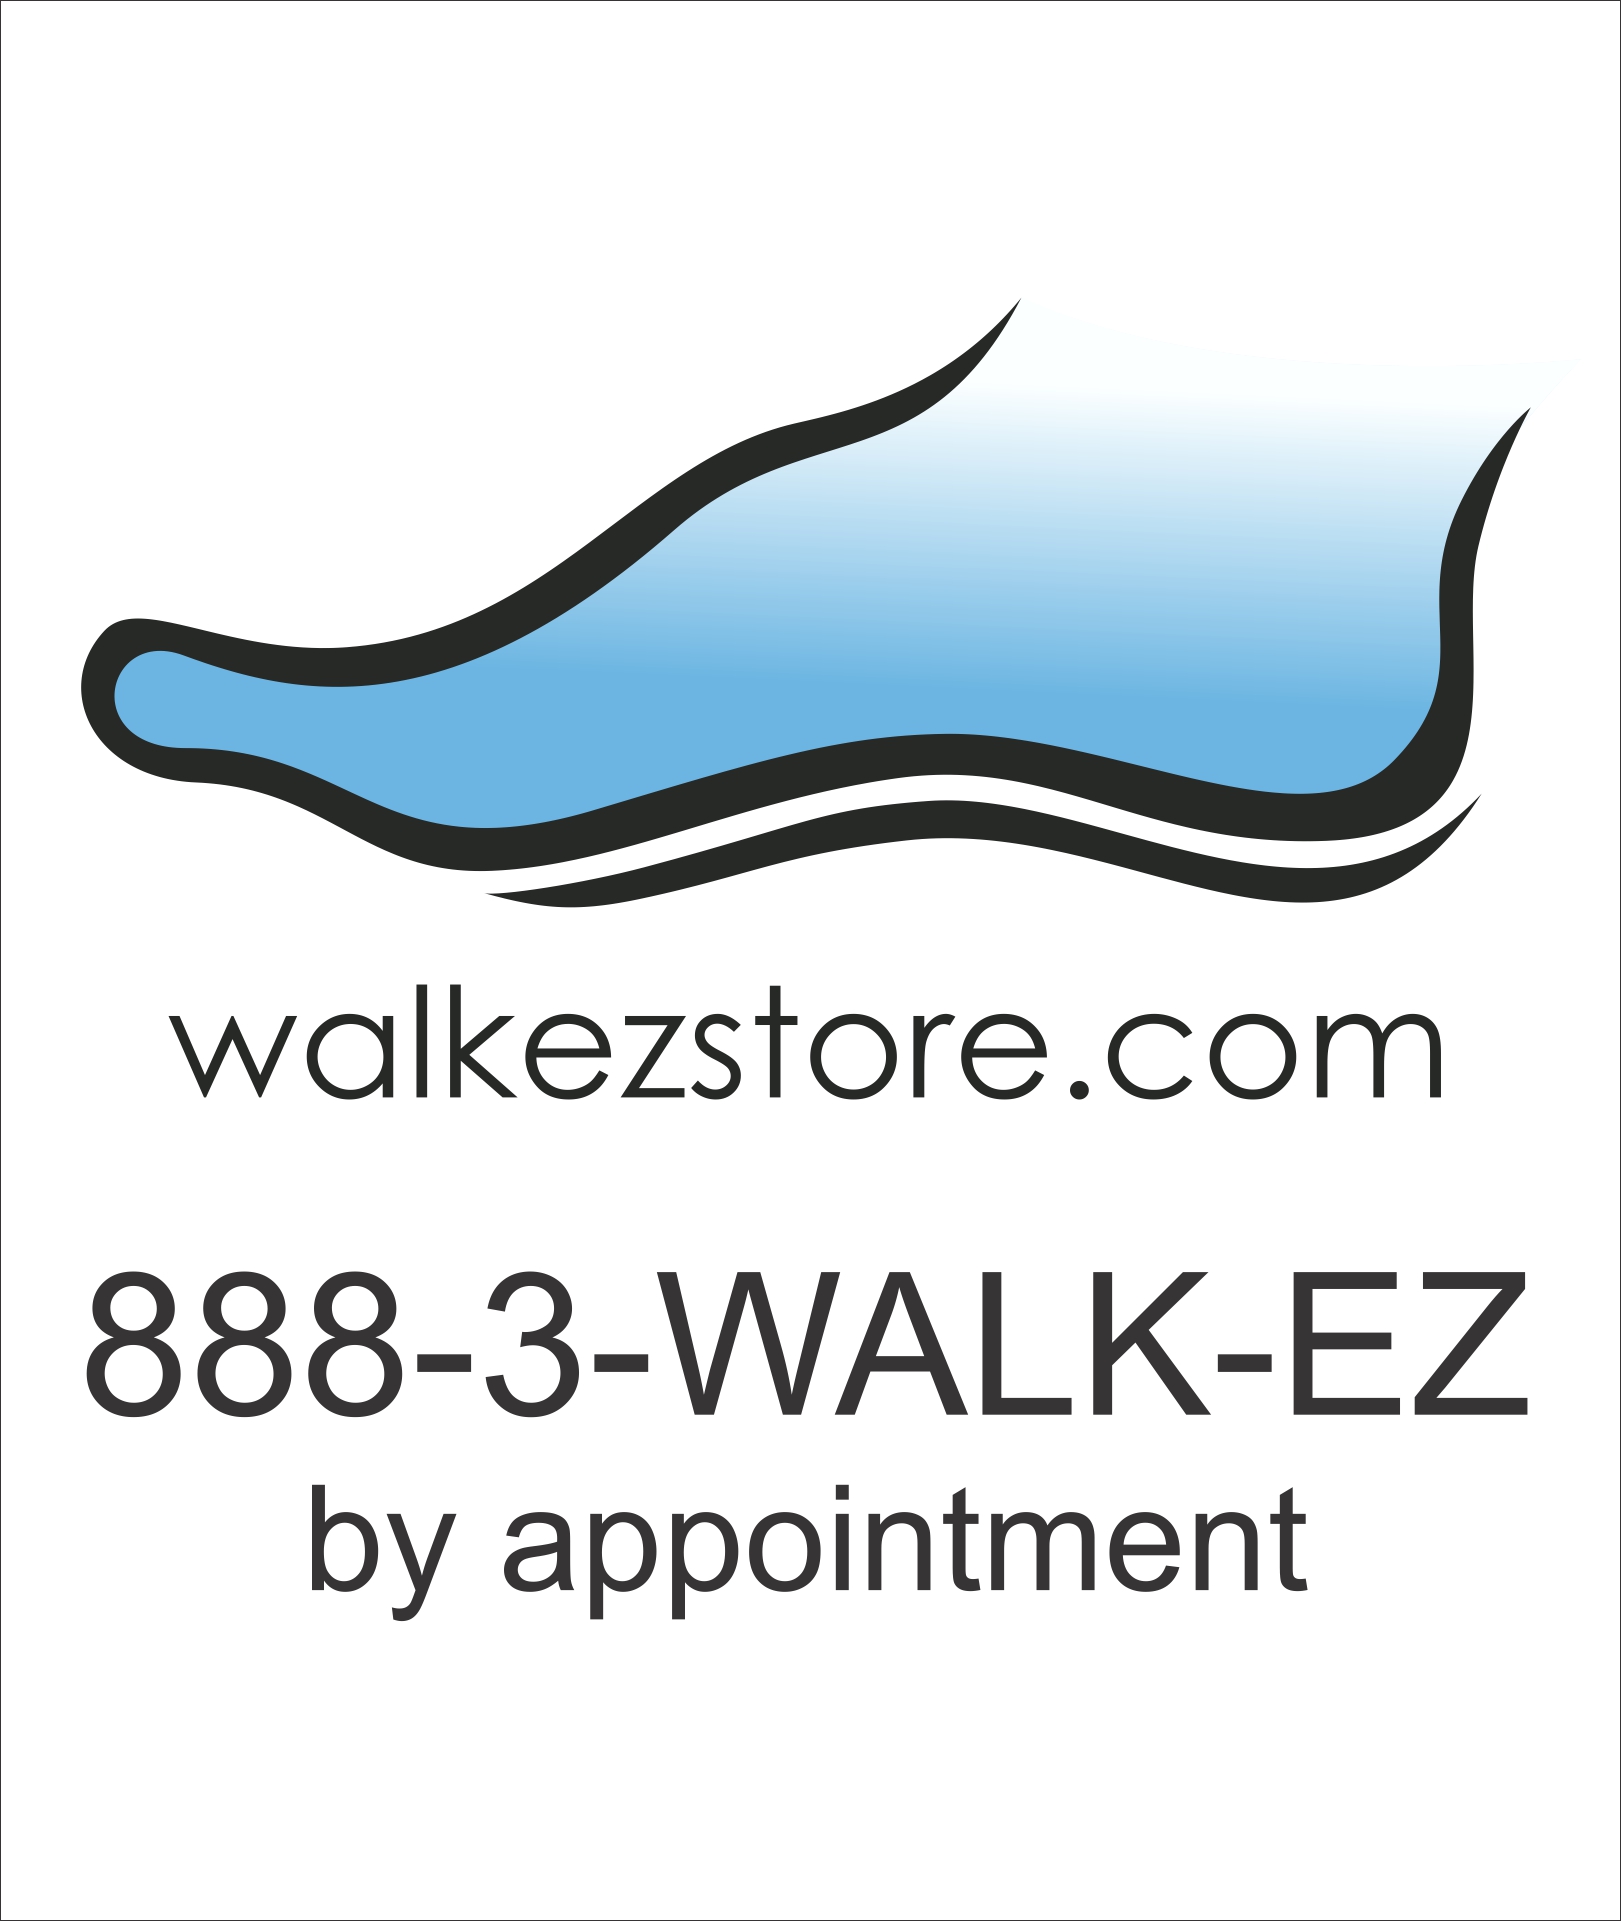 The WalkEZStore